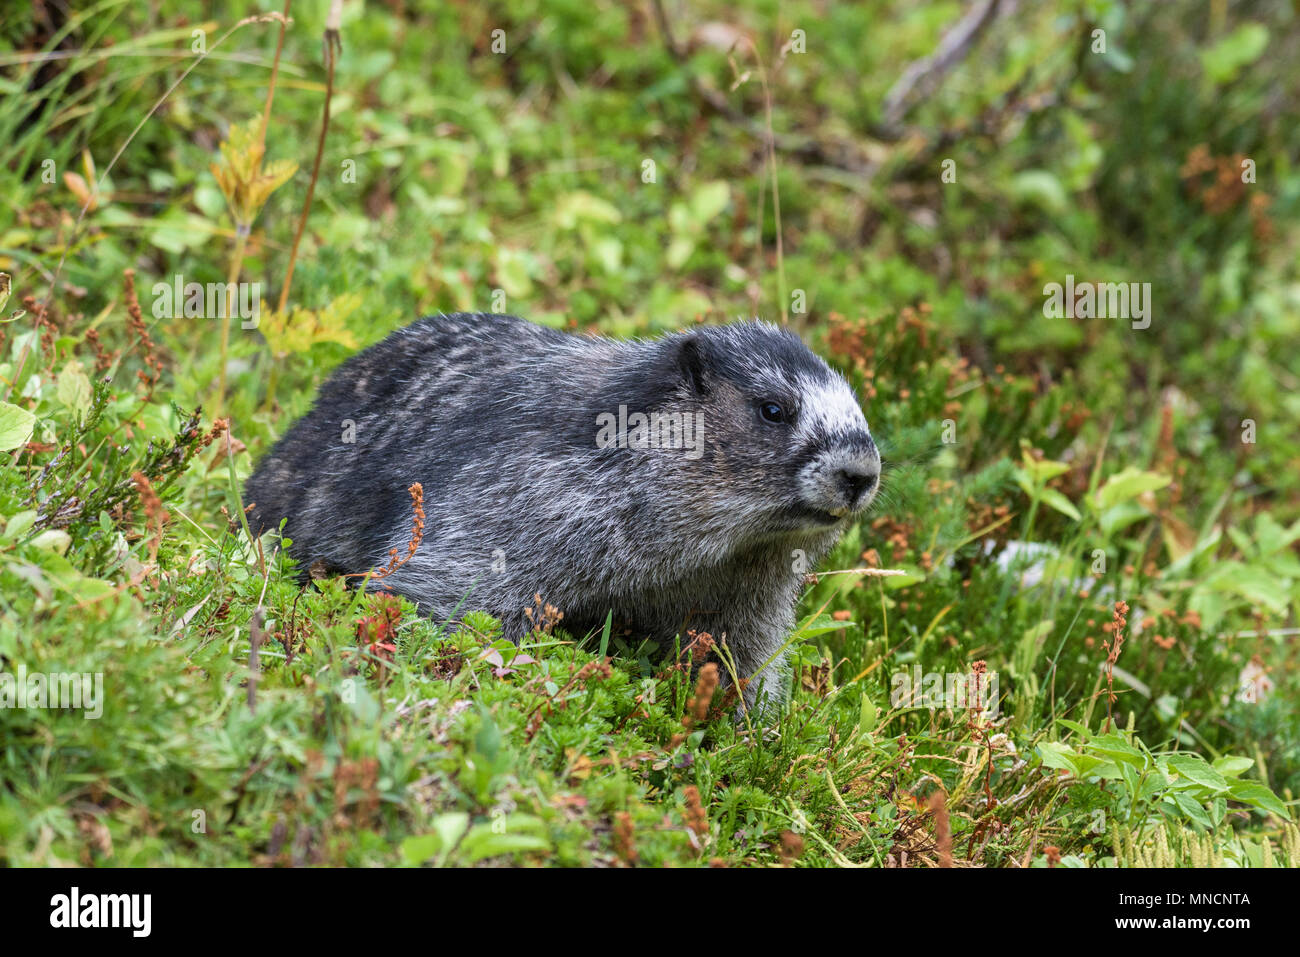 Hoary marmot (Marmota caligata) in the grass, Jasper National Park, Alberta, Canada Stock Photo